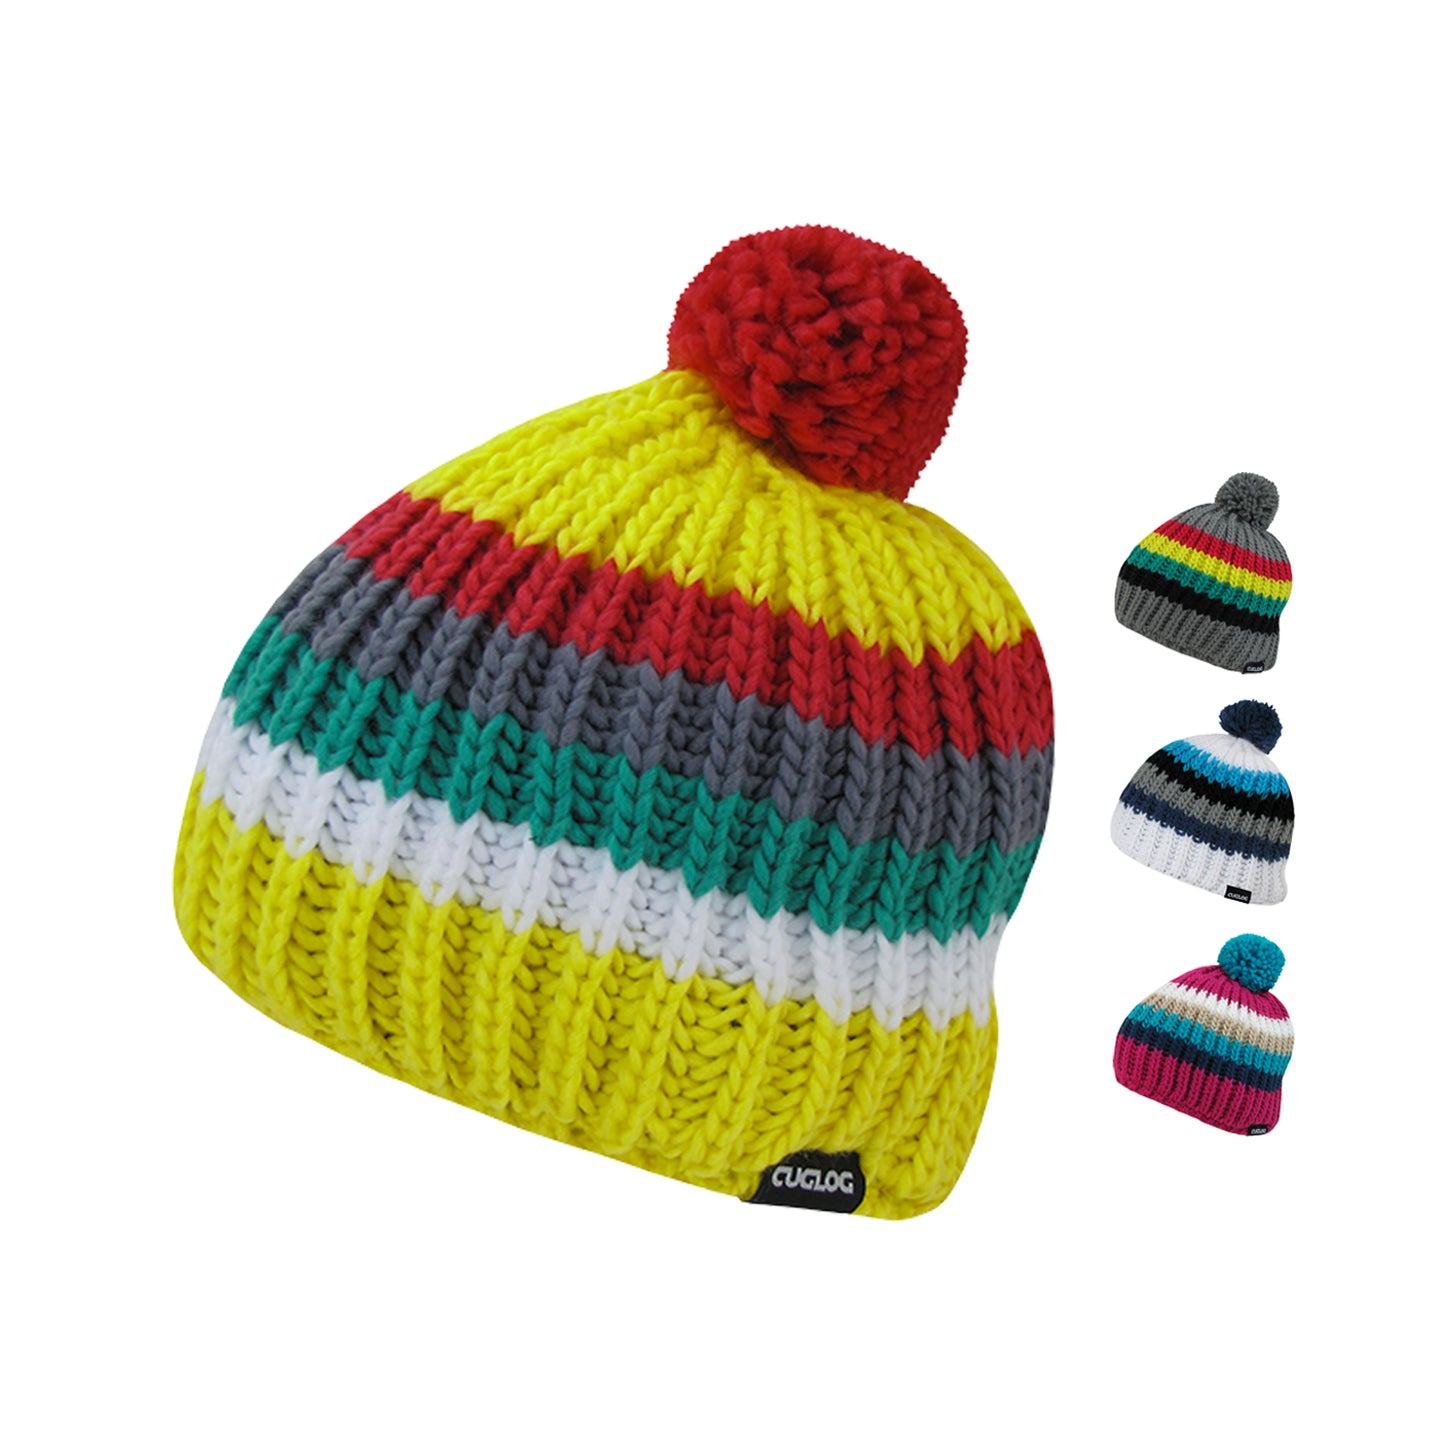 Cuglog K028 Mont Ventoux Cable Knit Striped Pom Pom Beanies Hats Winter Caps